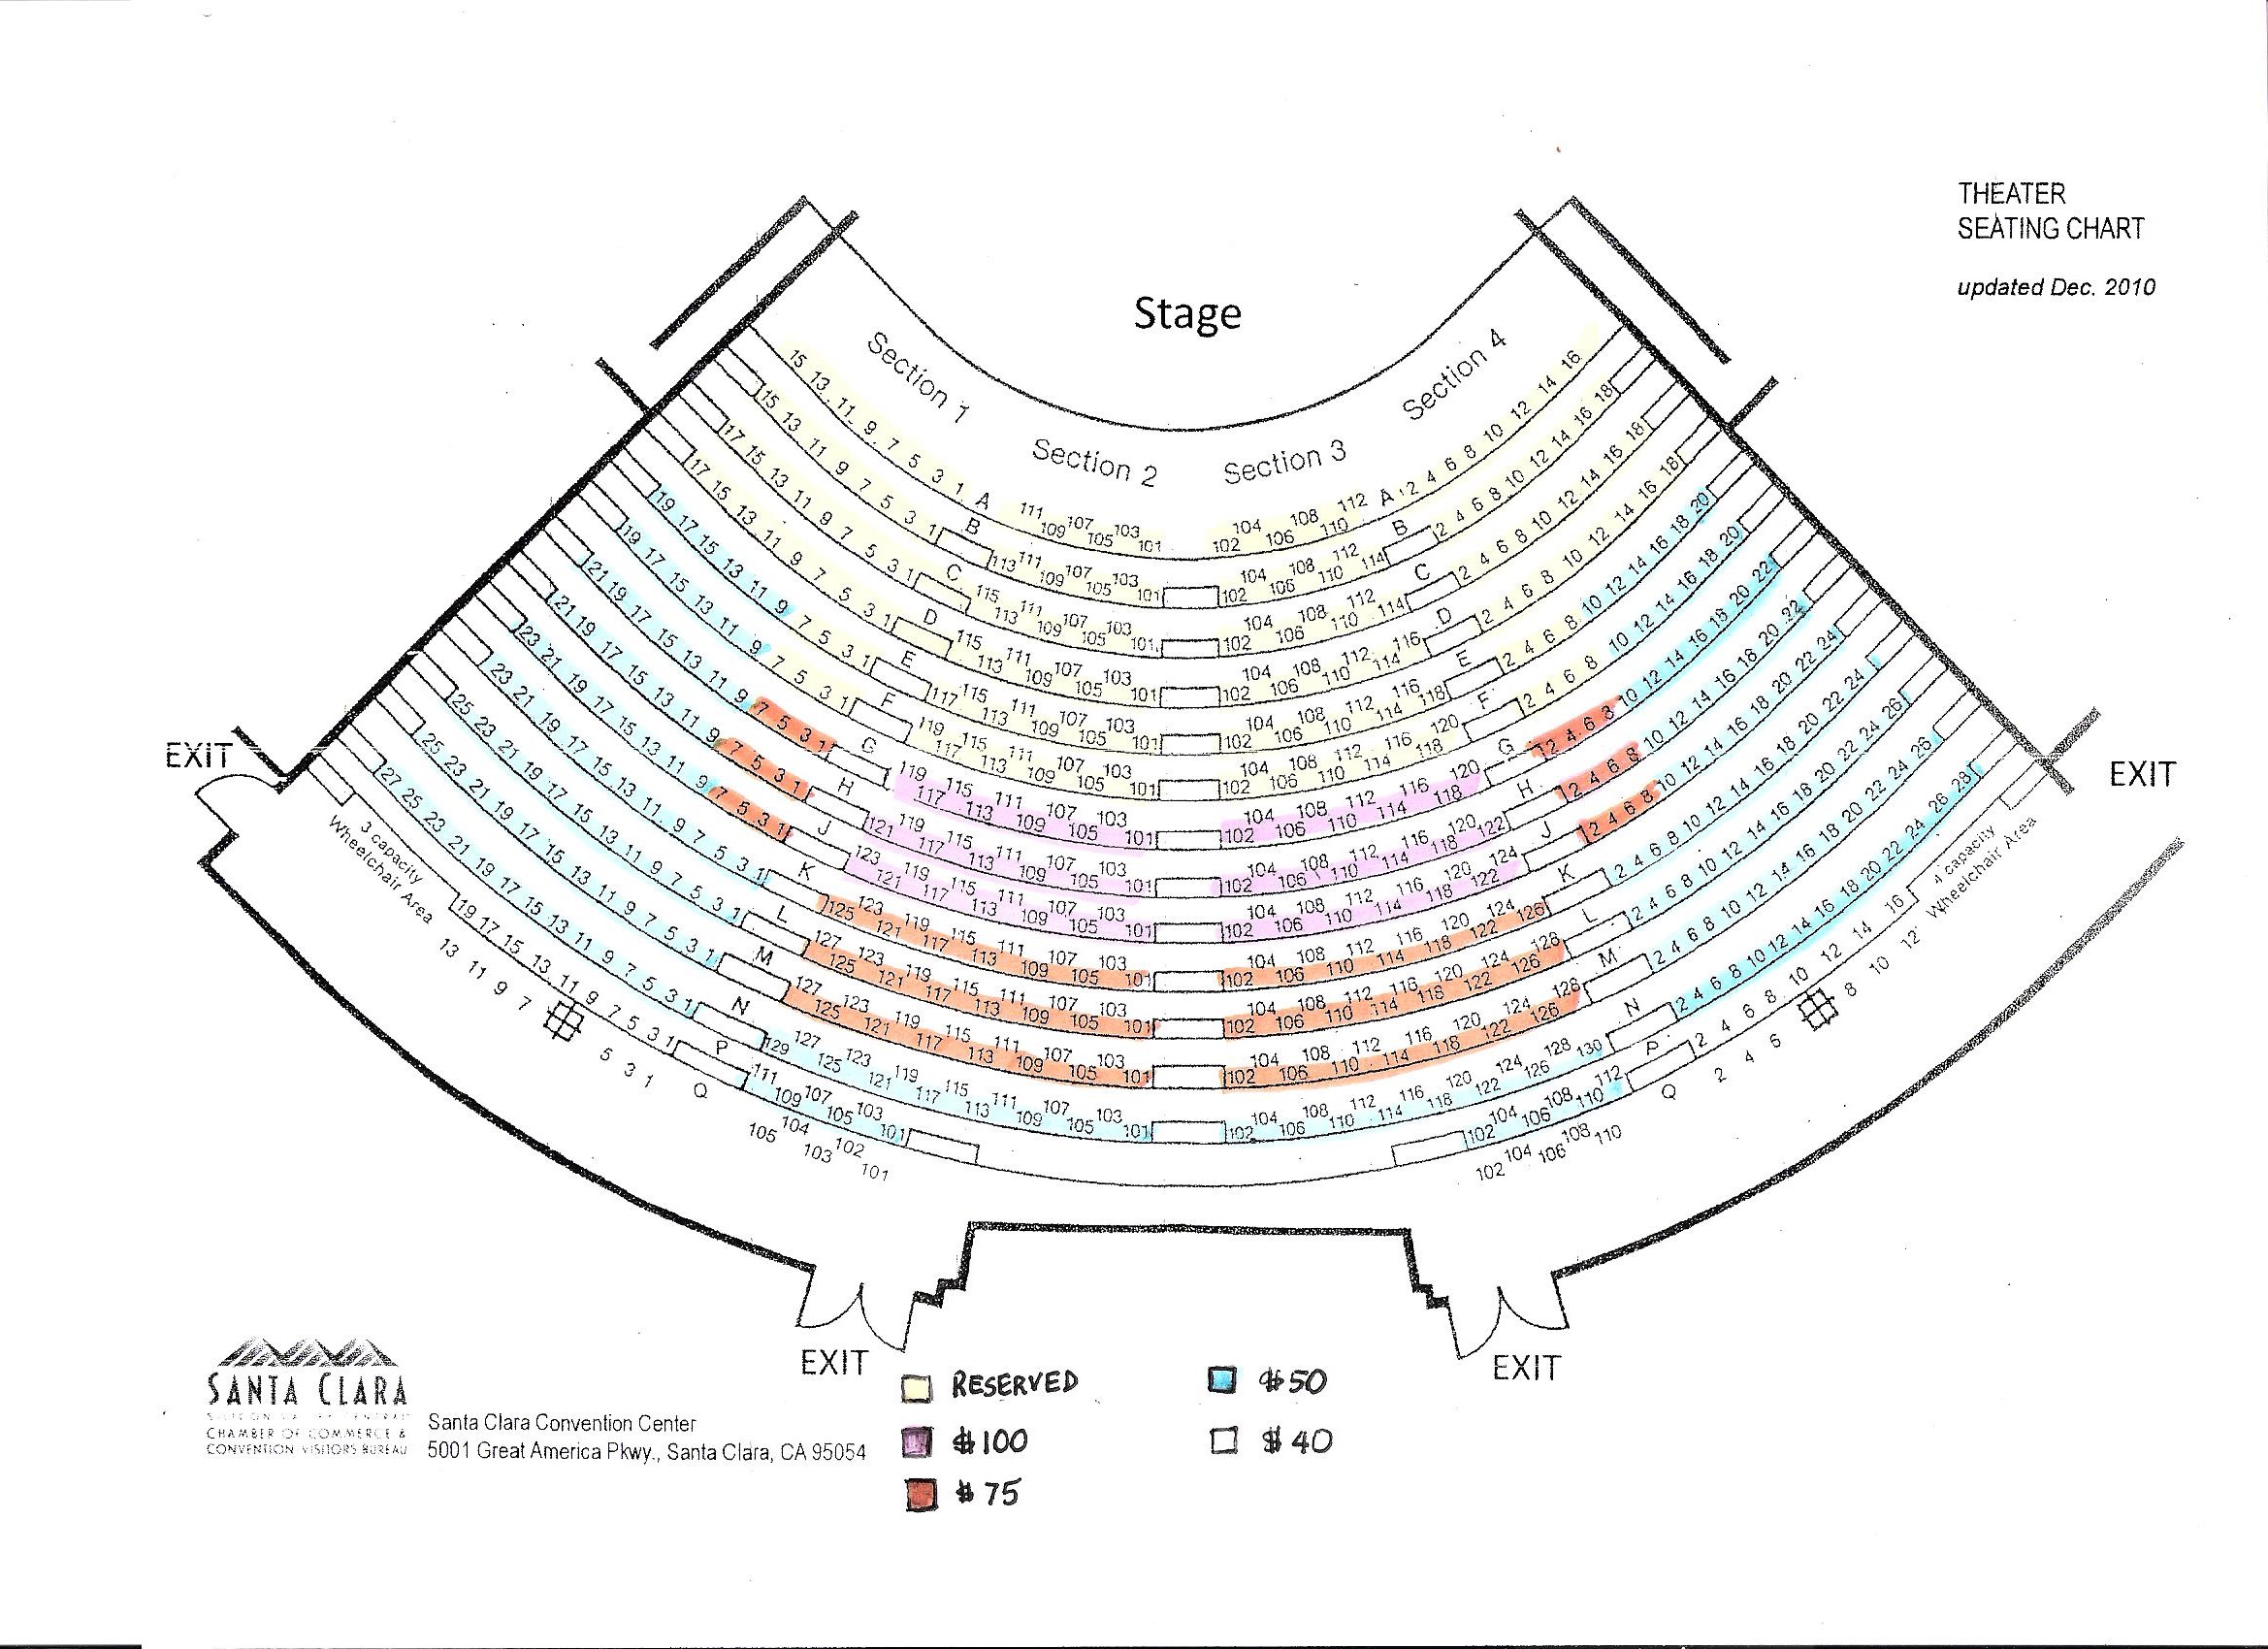 Santa Clara Convention Center Theater Seating Chart